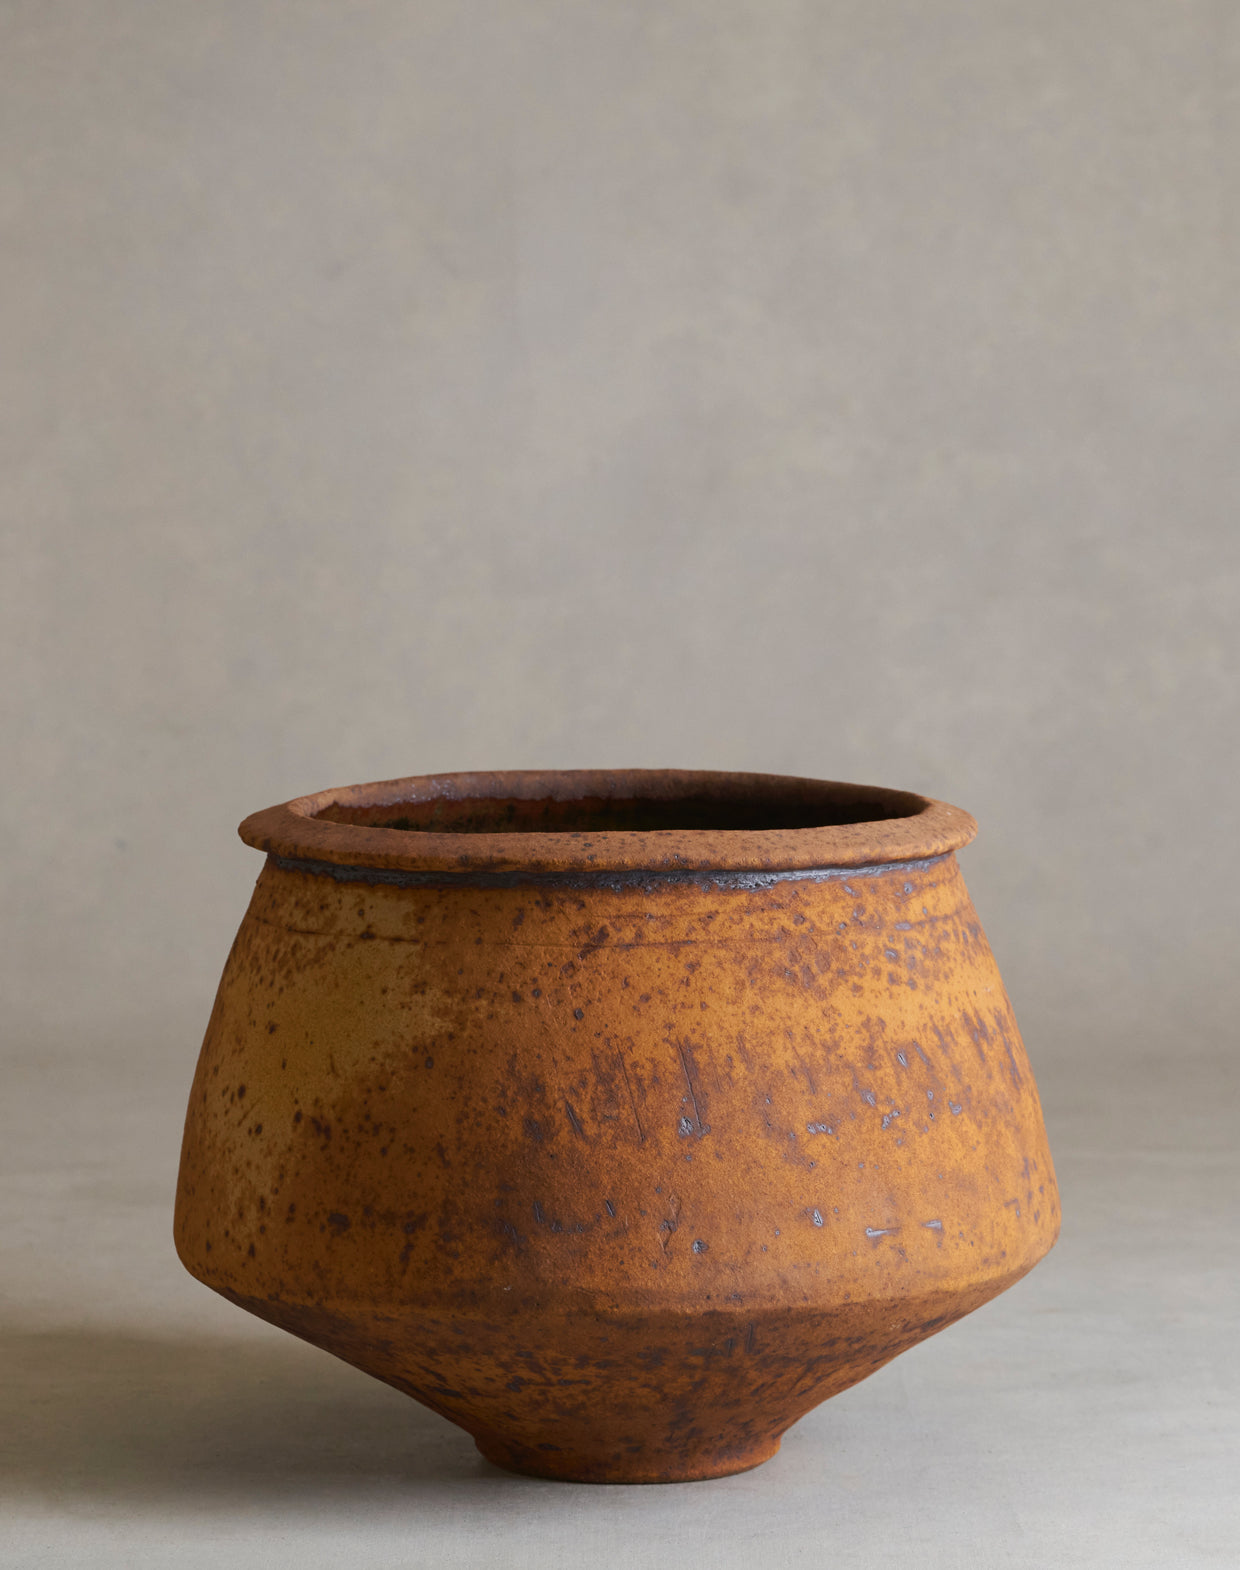 Rick Hintze Coiled Stoneware Vessel, "Untitled" No. 13